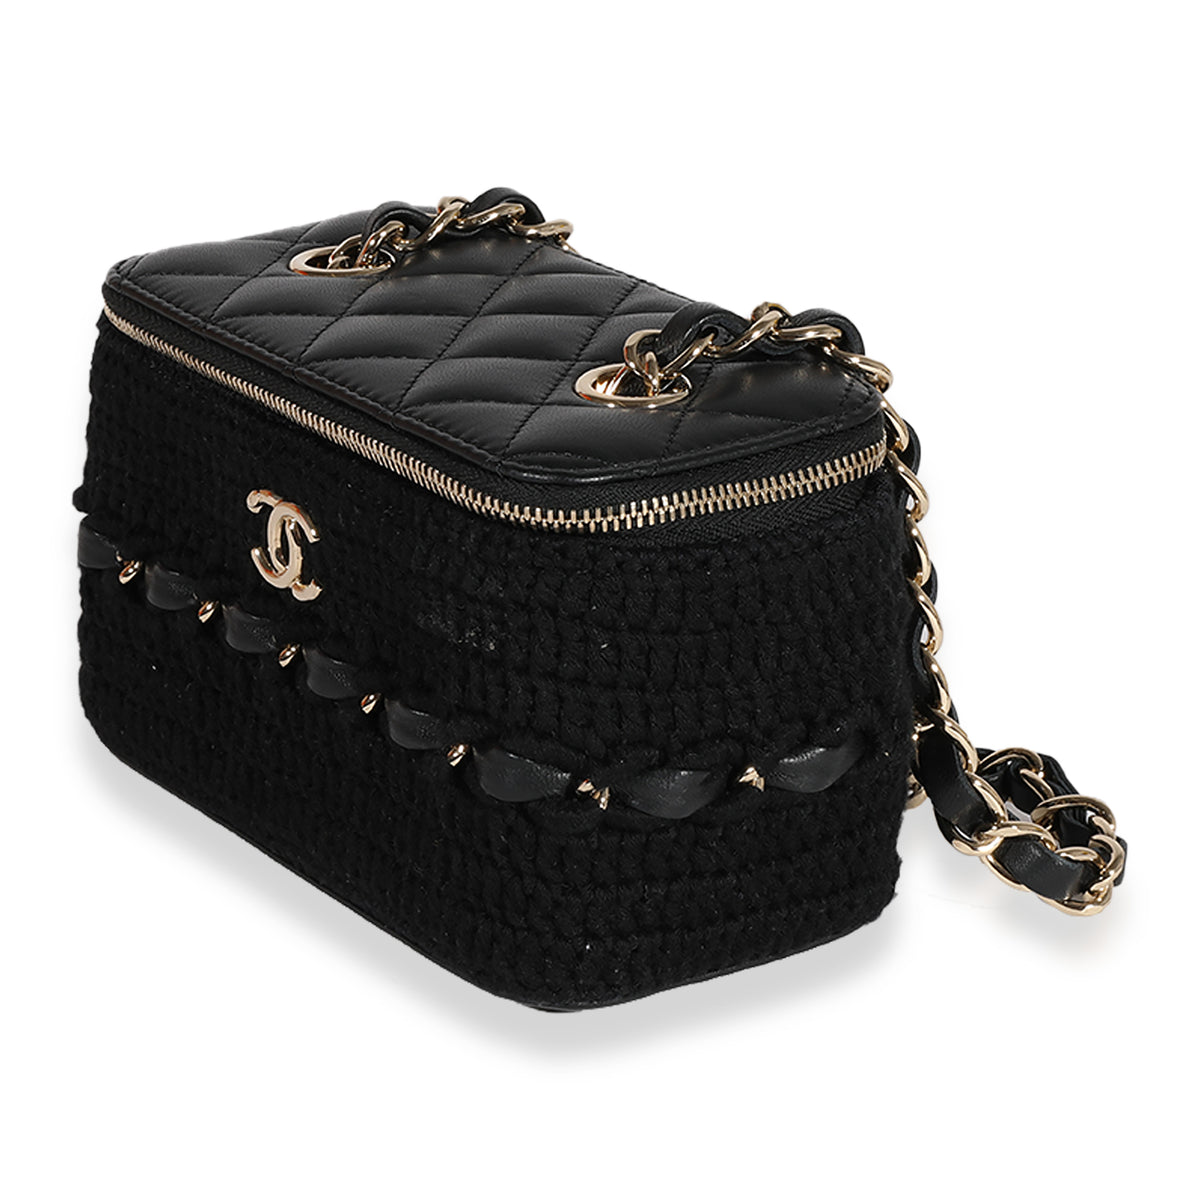 Chanel Small Vanity Case Black Crochet and Lambskin Light Gold Hardware